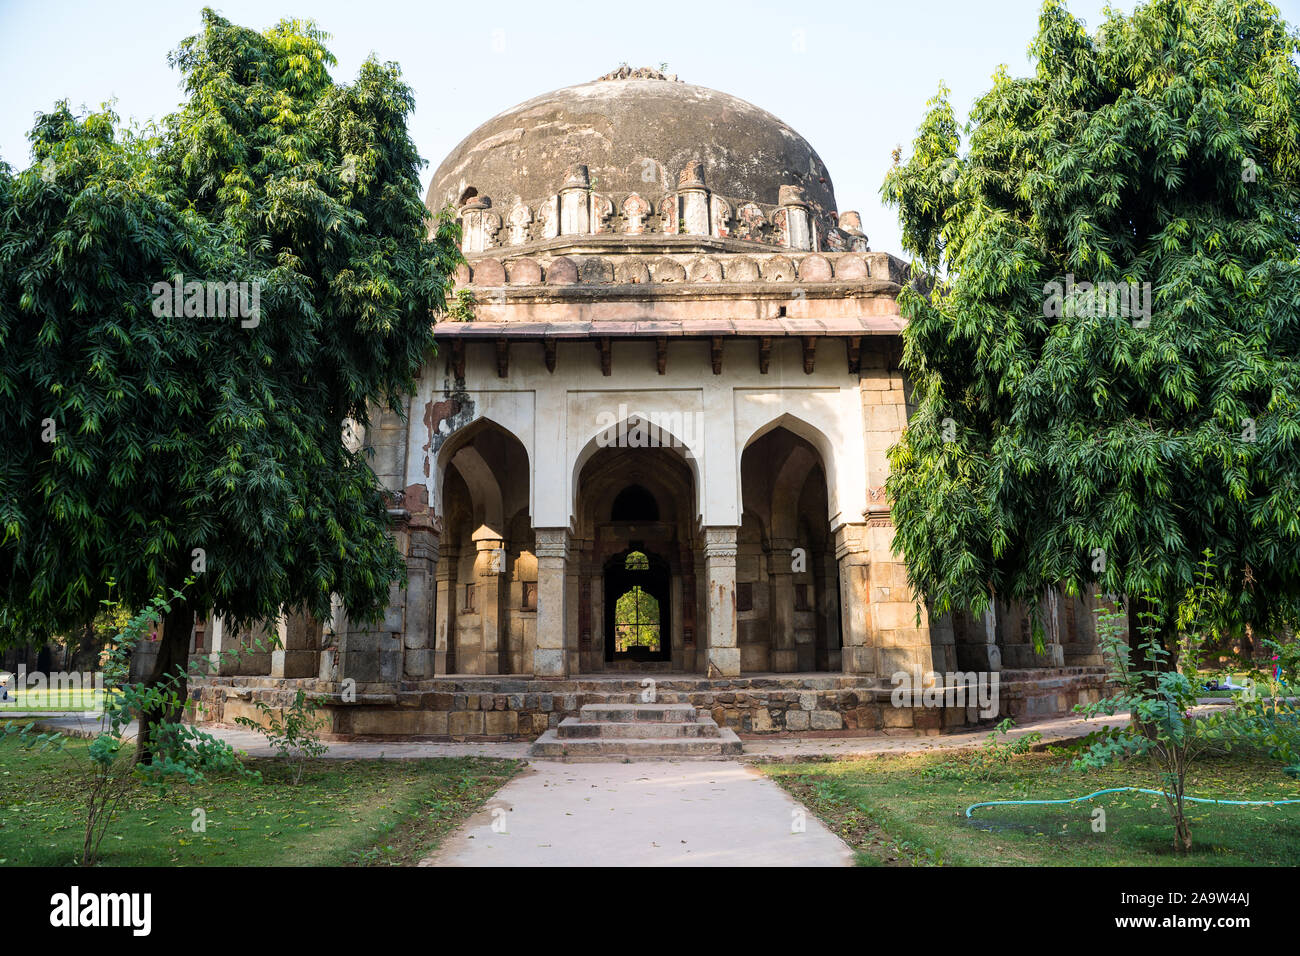 The tomb of sikandar lodi, located in Lodi Gardens in New Delhi India Stock Photo